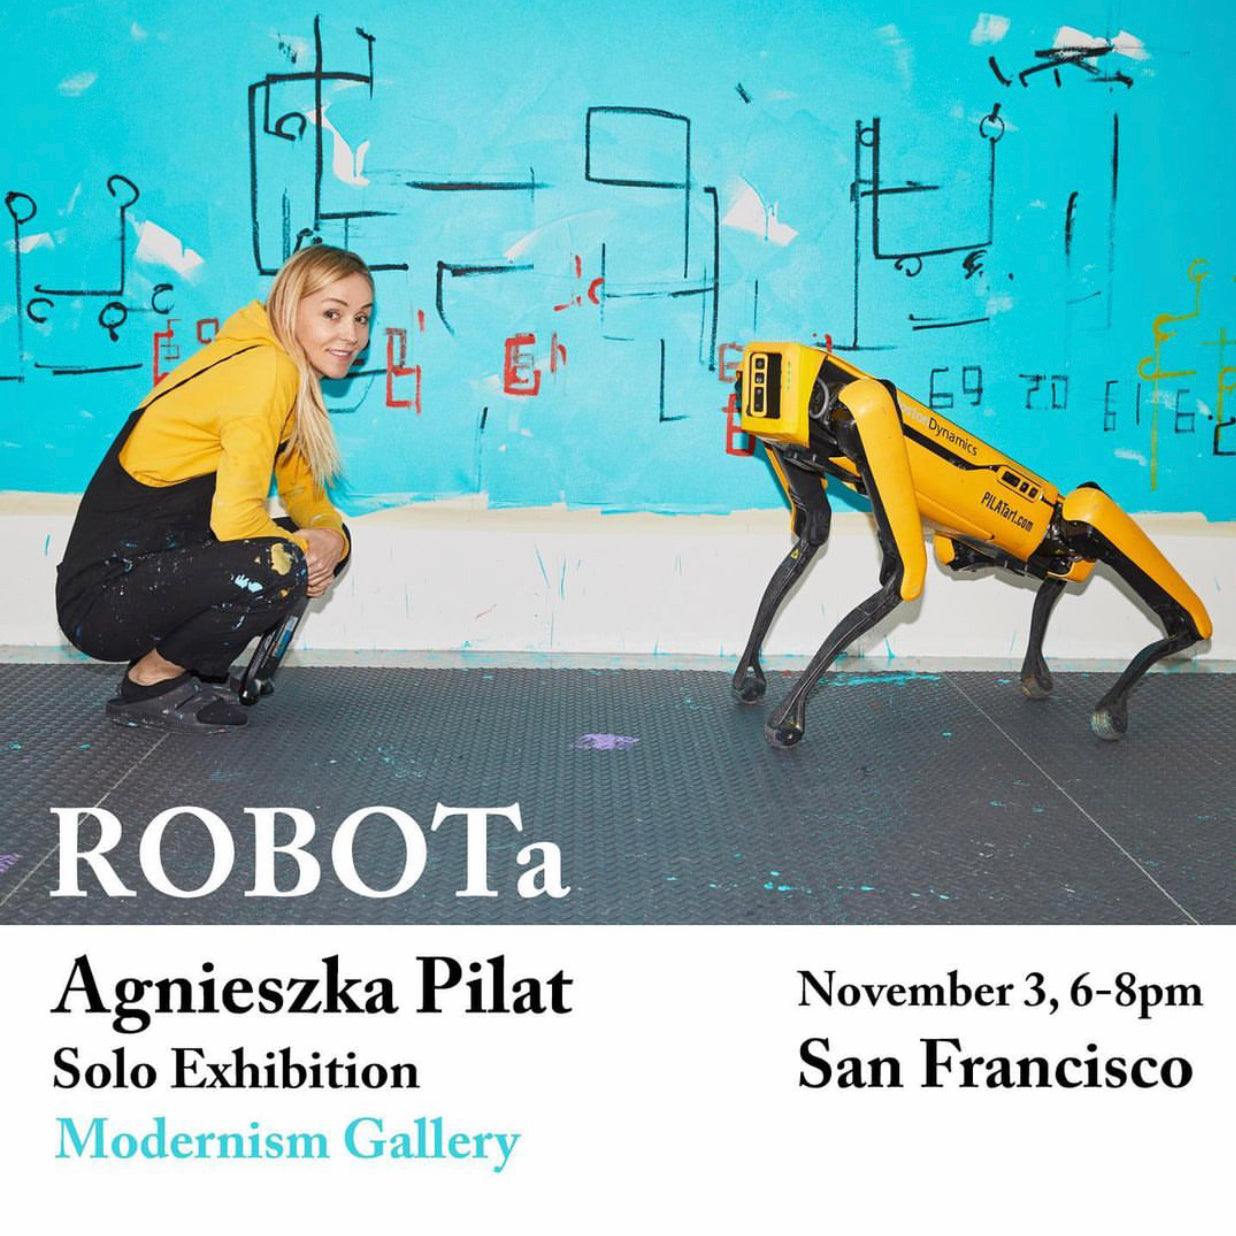 Agnieszka Pilat: "ROBOTa" Exhibit at MODERNISM, SF